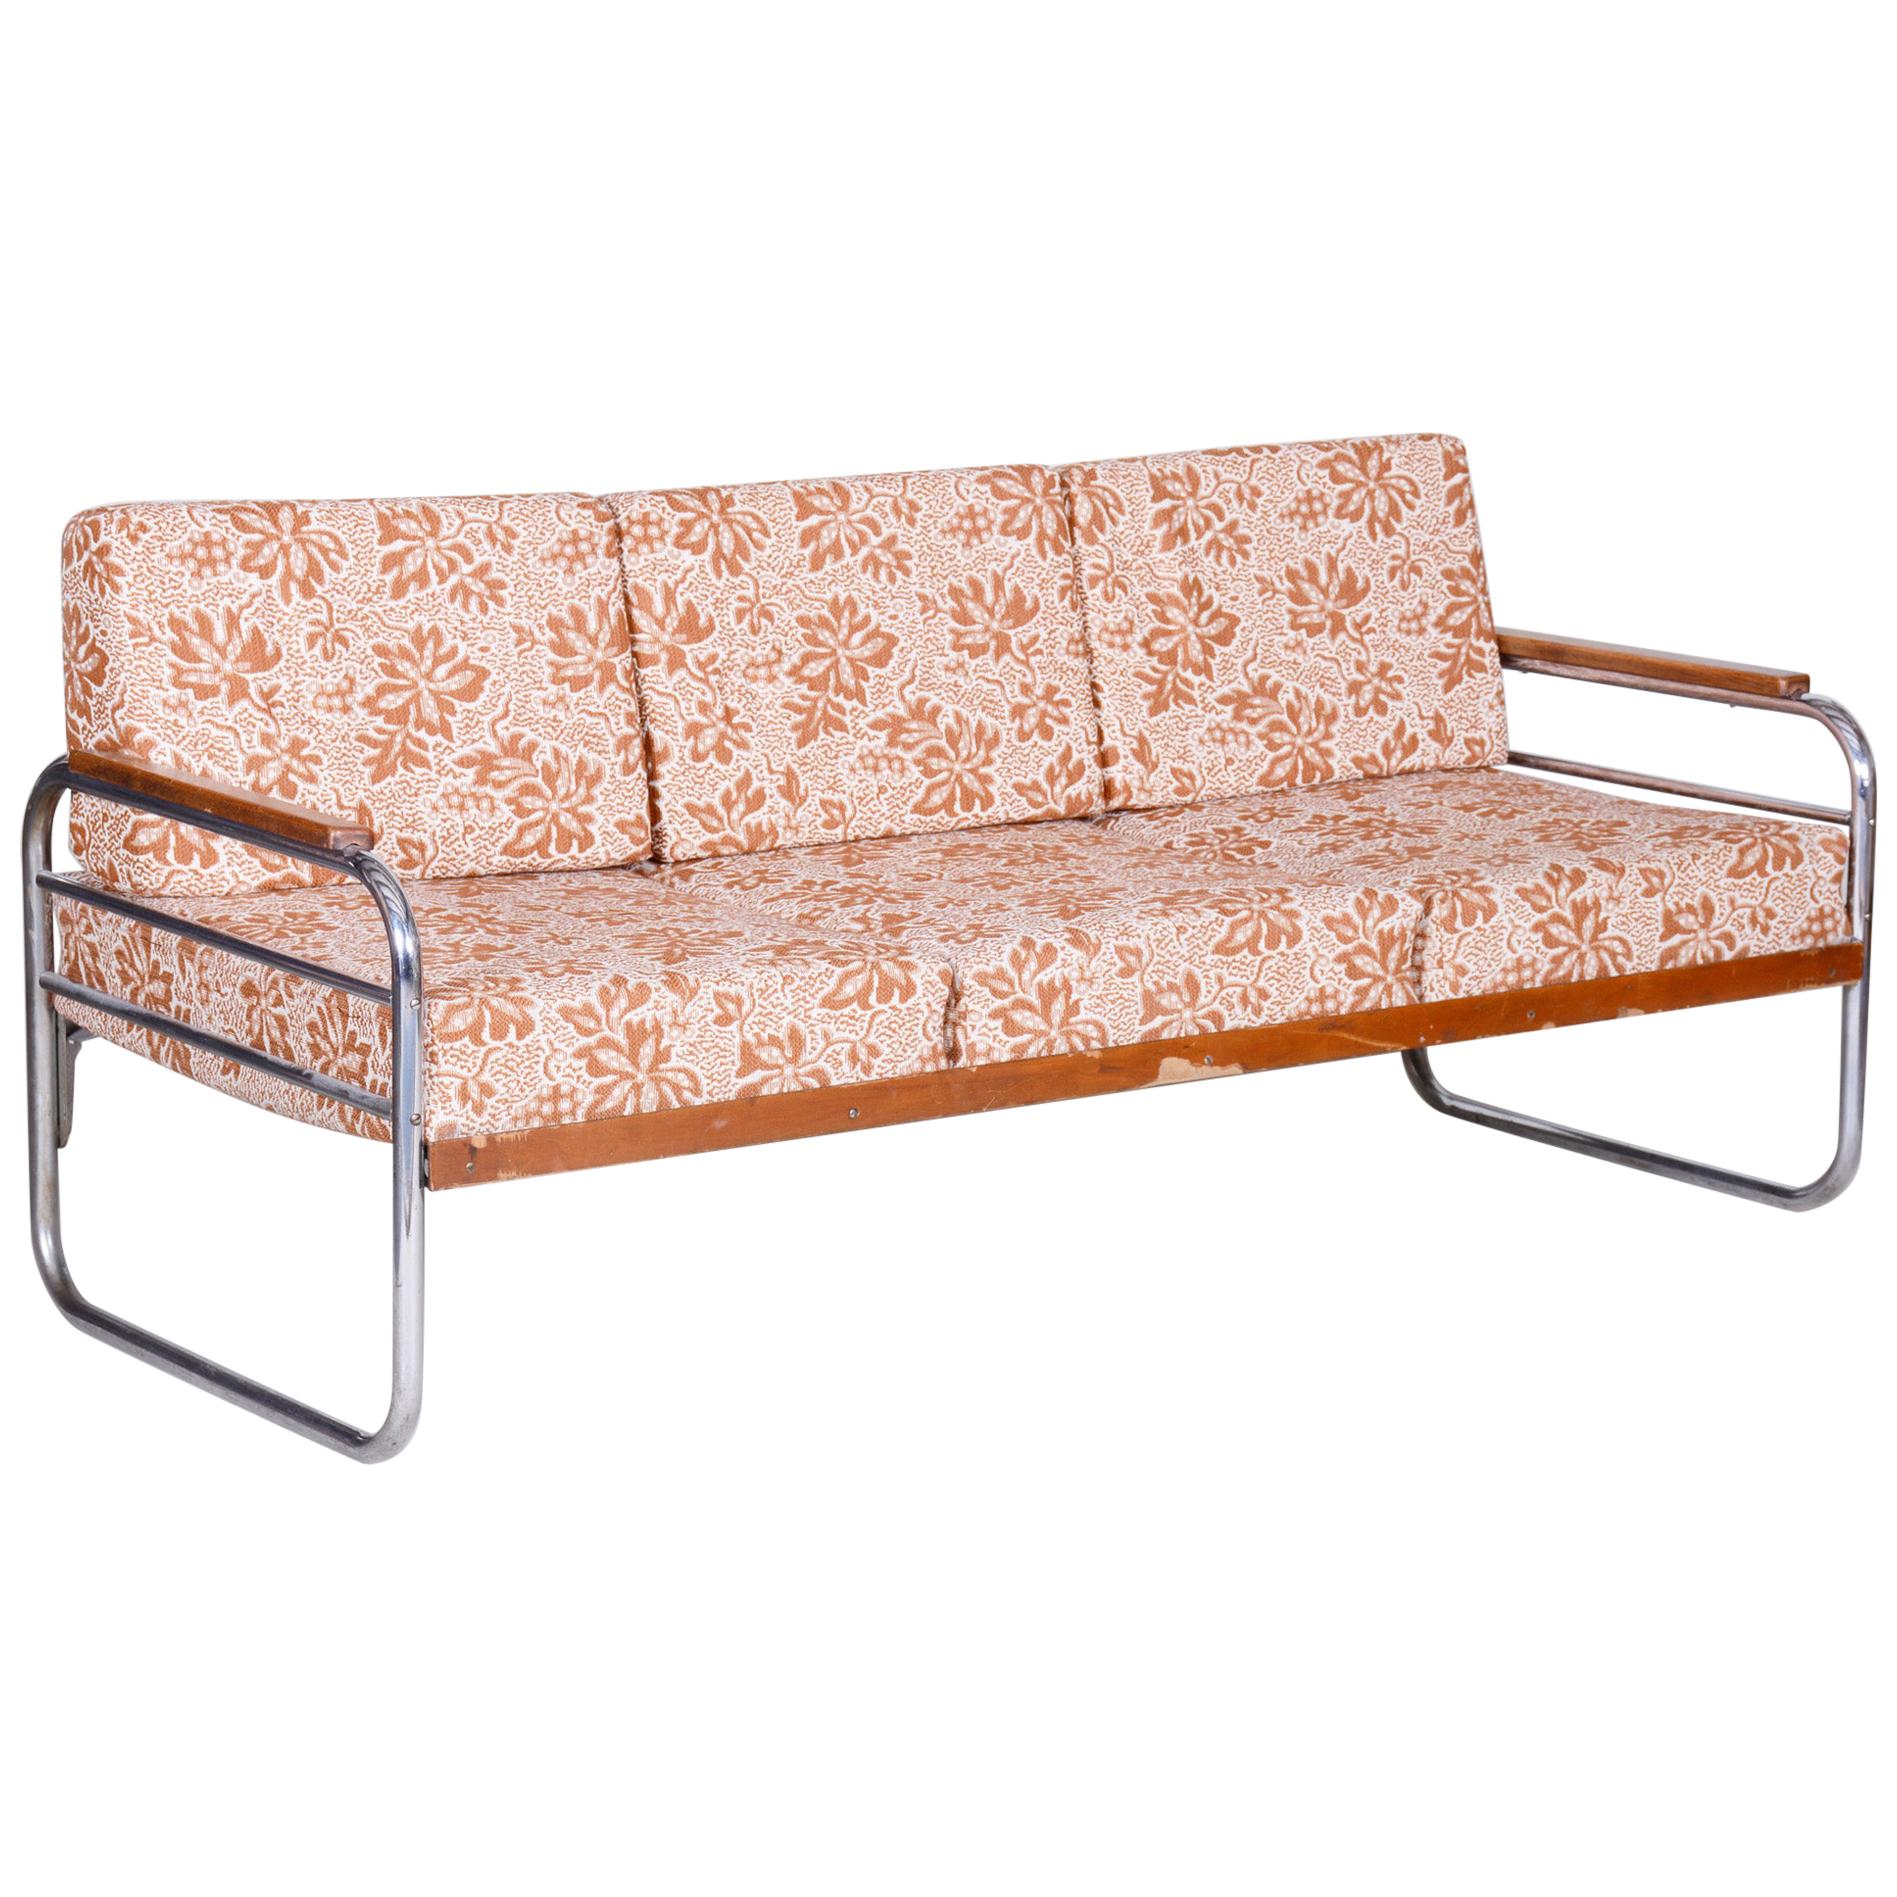 Fully Original Bauhaus fabric Tubular Chrome Sofa by Vichr a Spol, 1930s Czechia